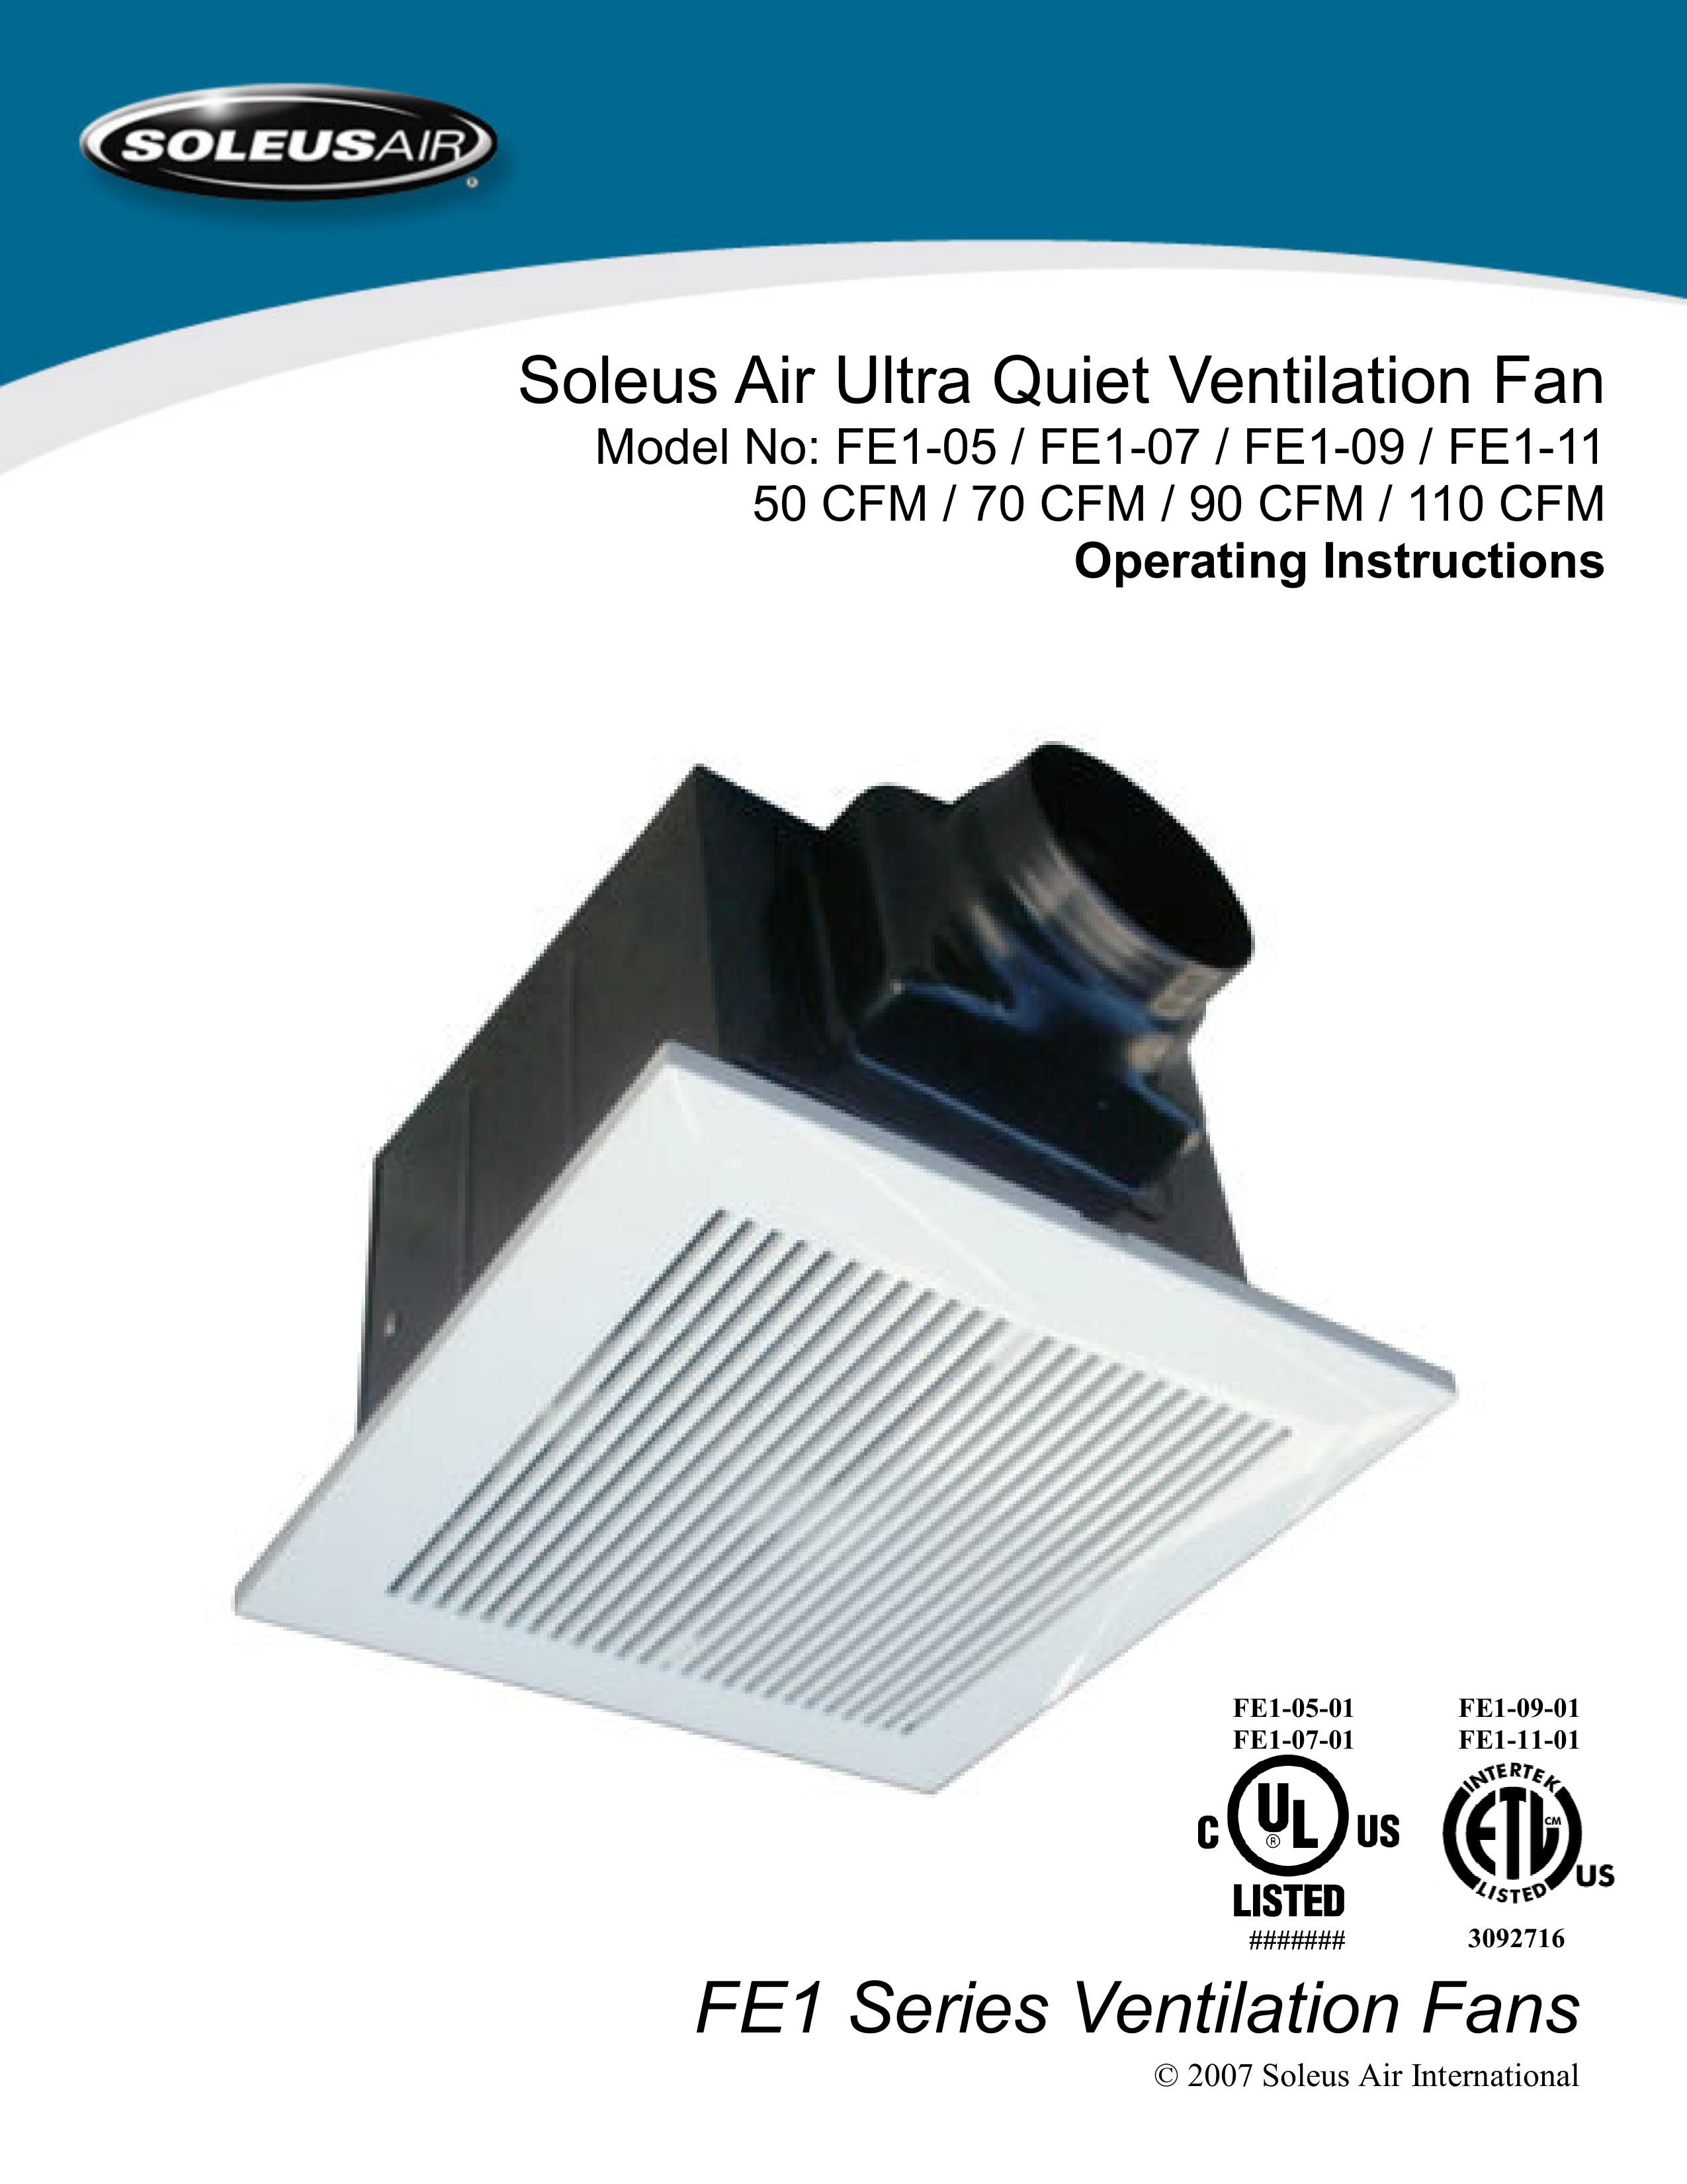 Soleus Air 50 CFM Ventilation Hood User Manual